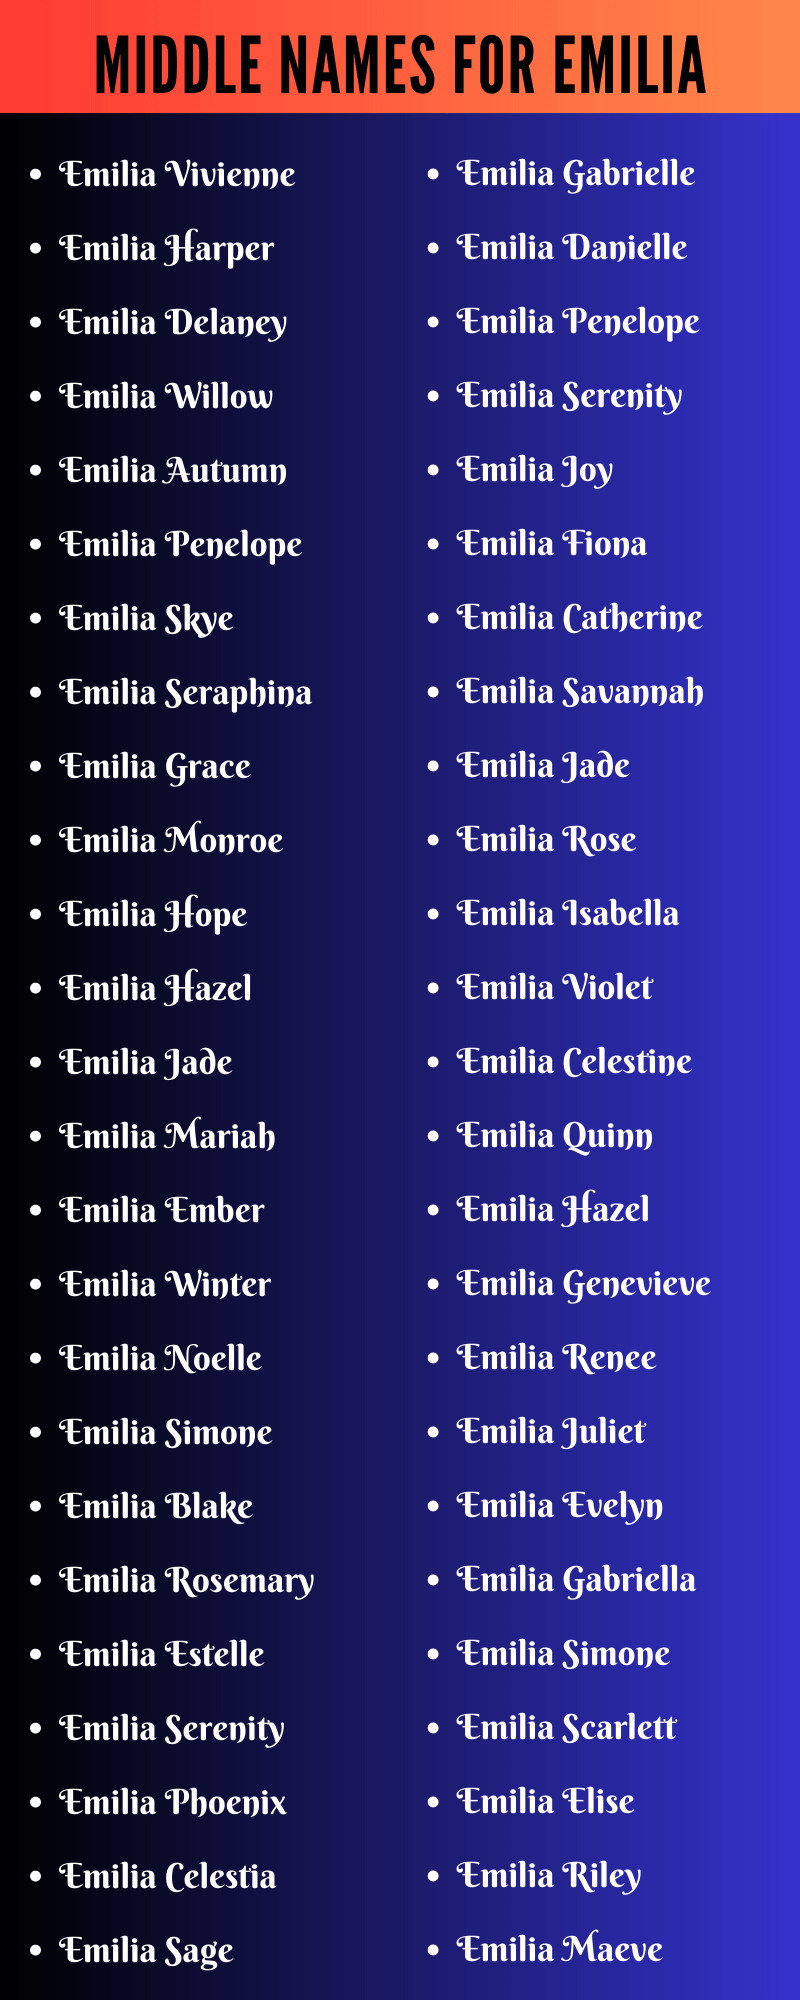 Middle Names For Emilia